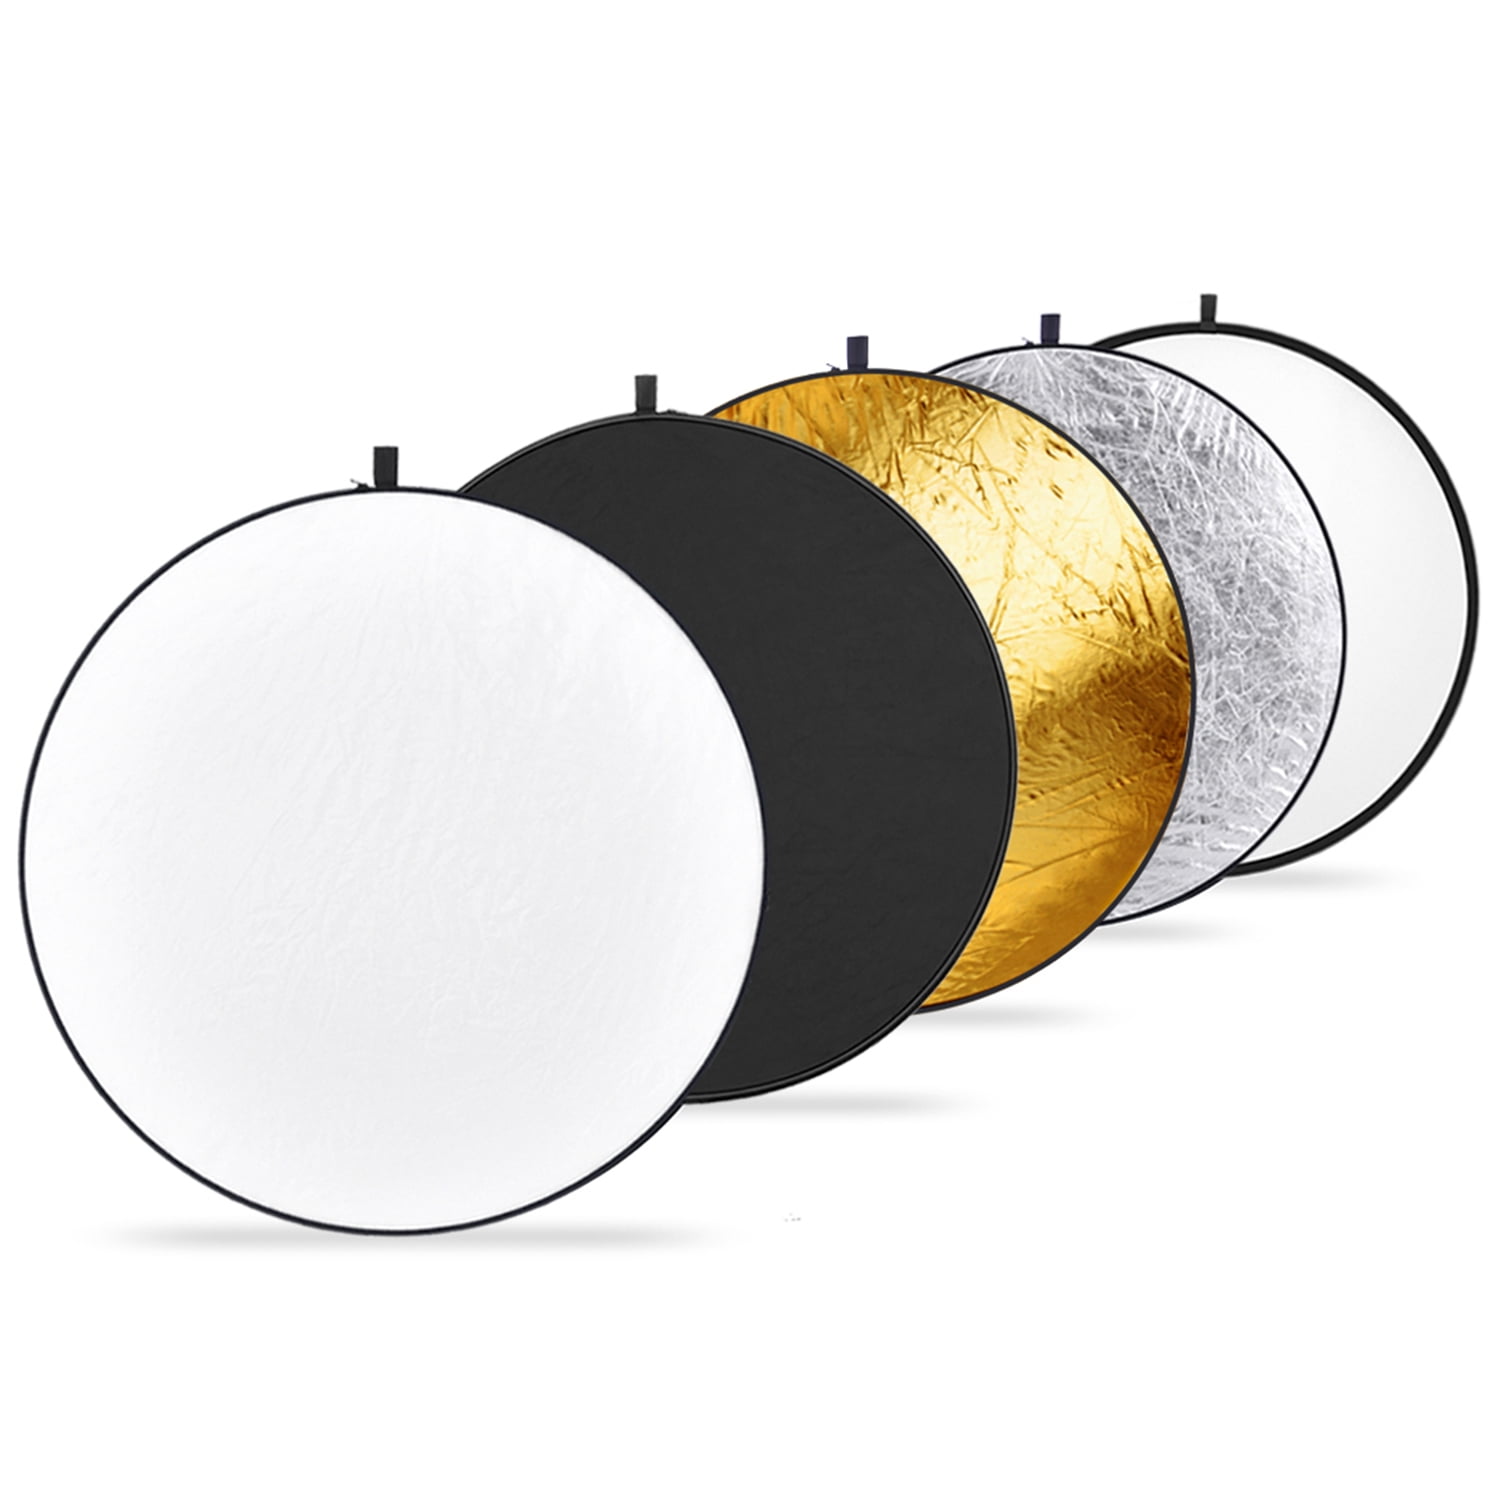 PULUZ Photography Reflector 5 in 1 110CM Portable Multi-disc Collapsible Photo Studio Light Reflector Board Silver/Translucent/Gold/White/Black